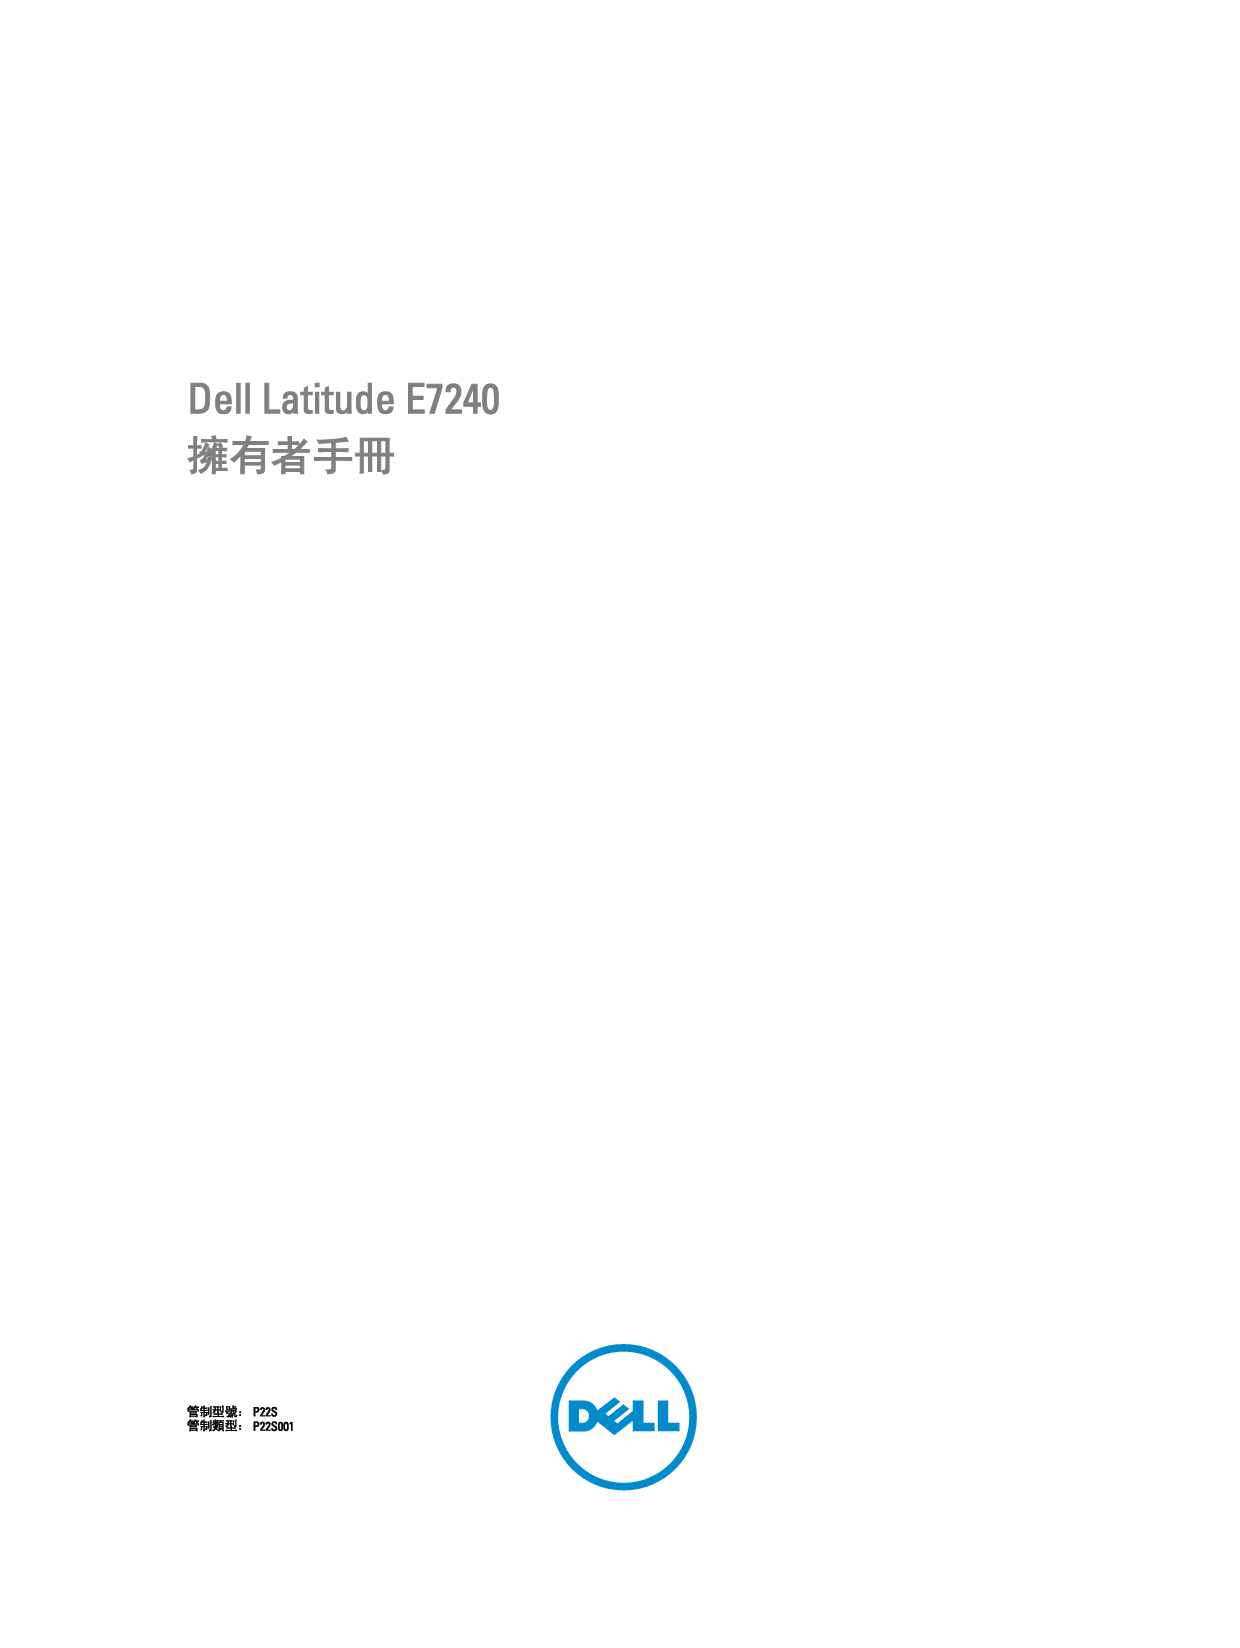 戴尔 Dell Latitude E7240 繁体 用户手册 封面